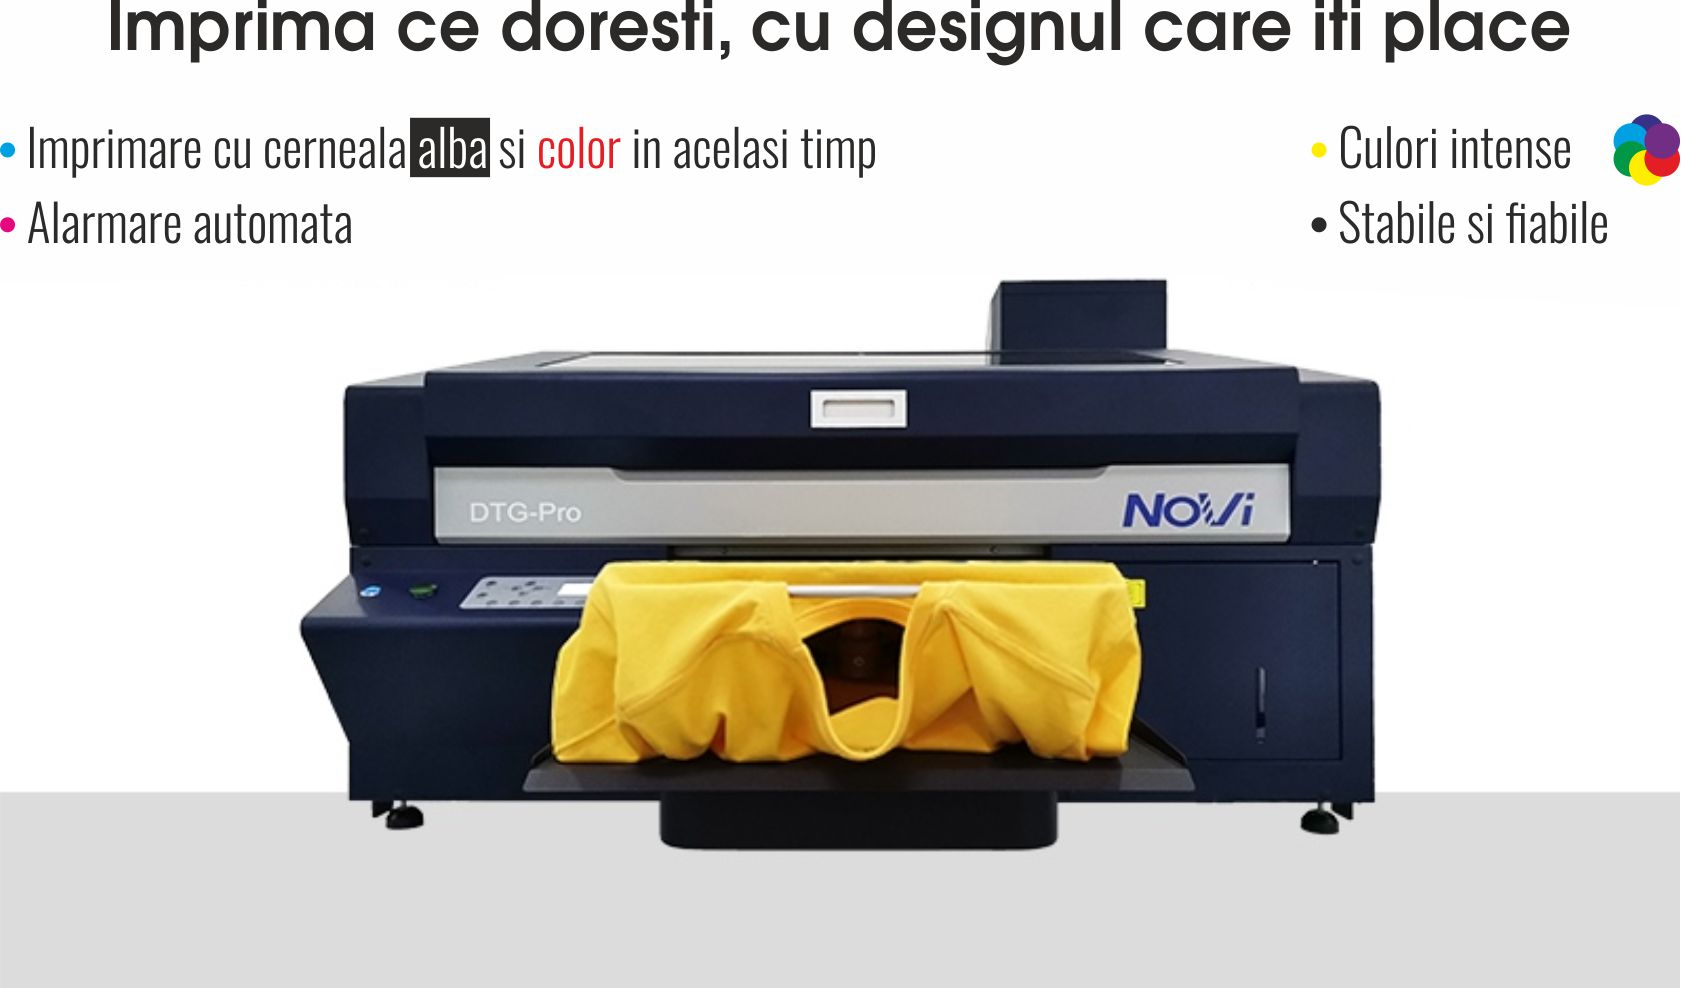 cabbage Warship on NOVI DTG-Pro imprimanta industriala de tricouri